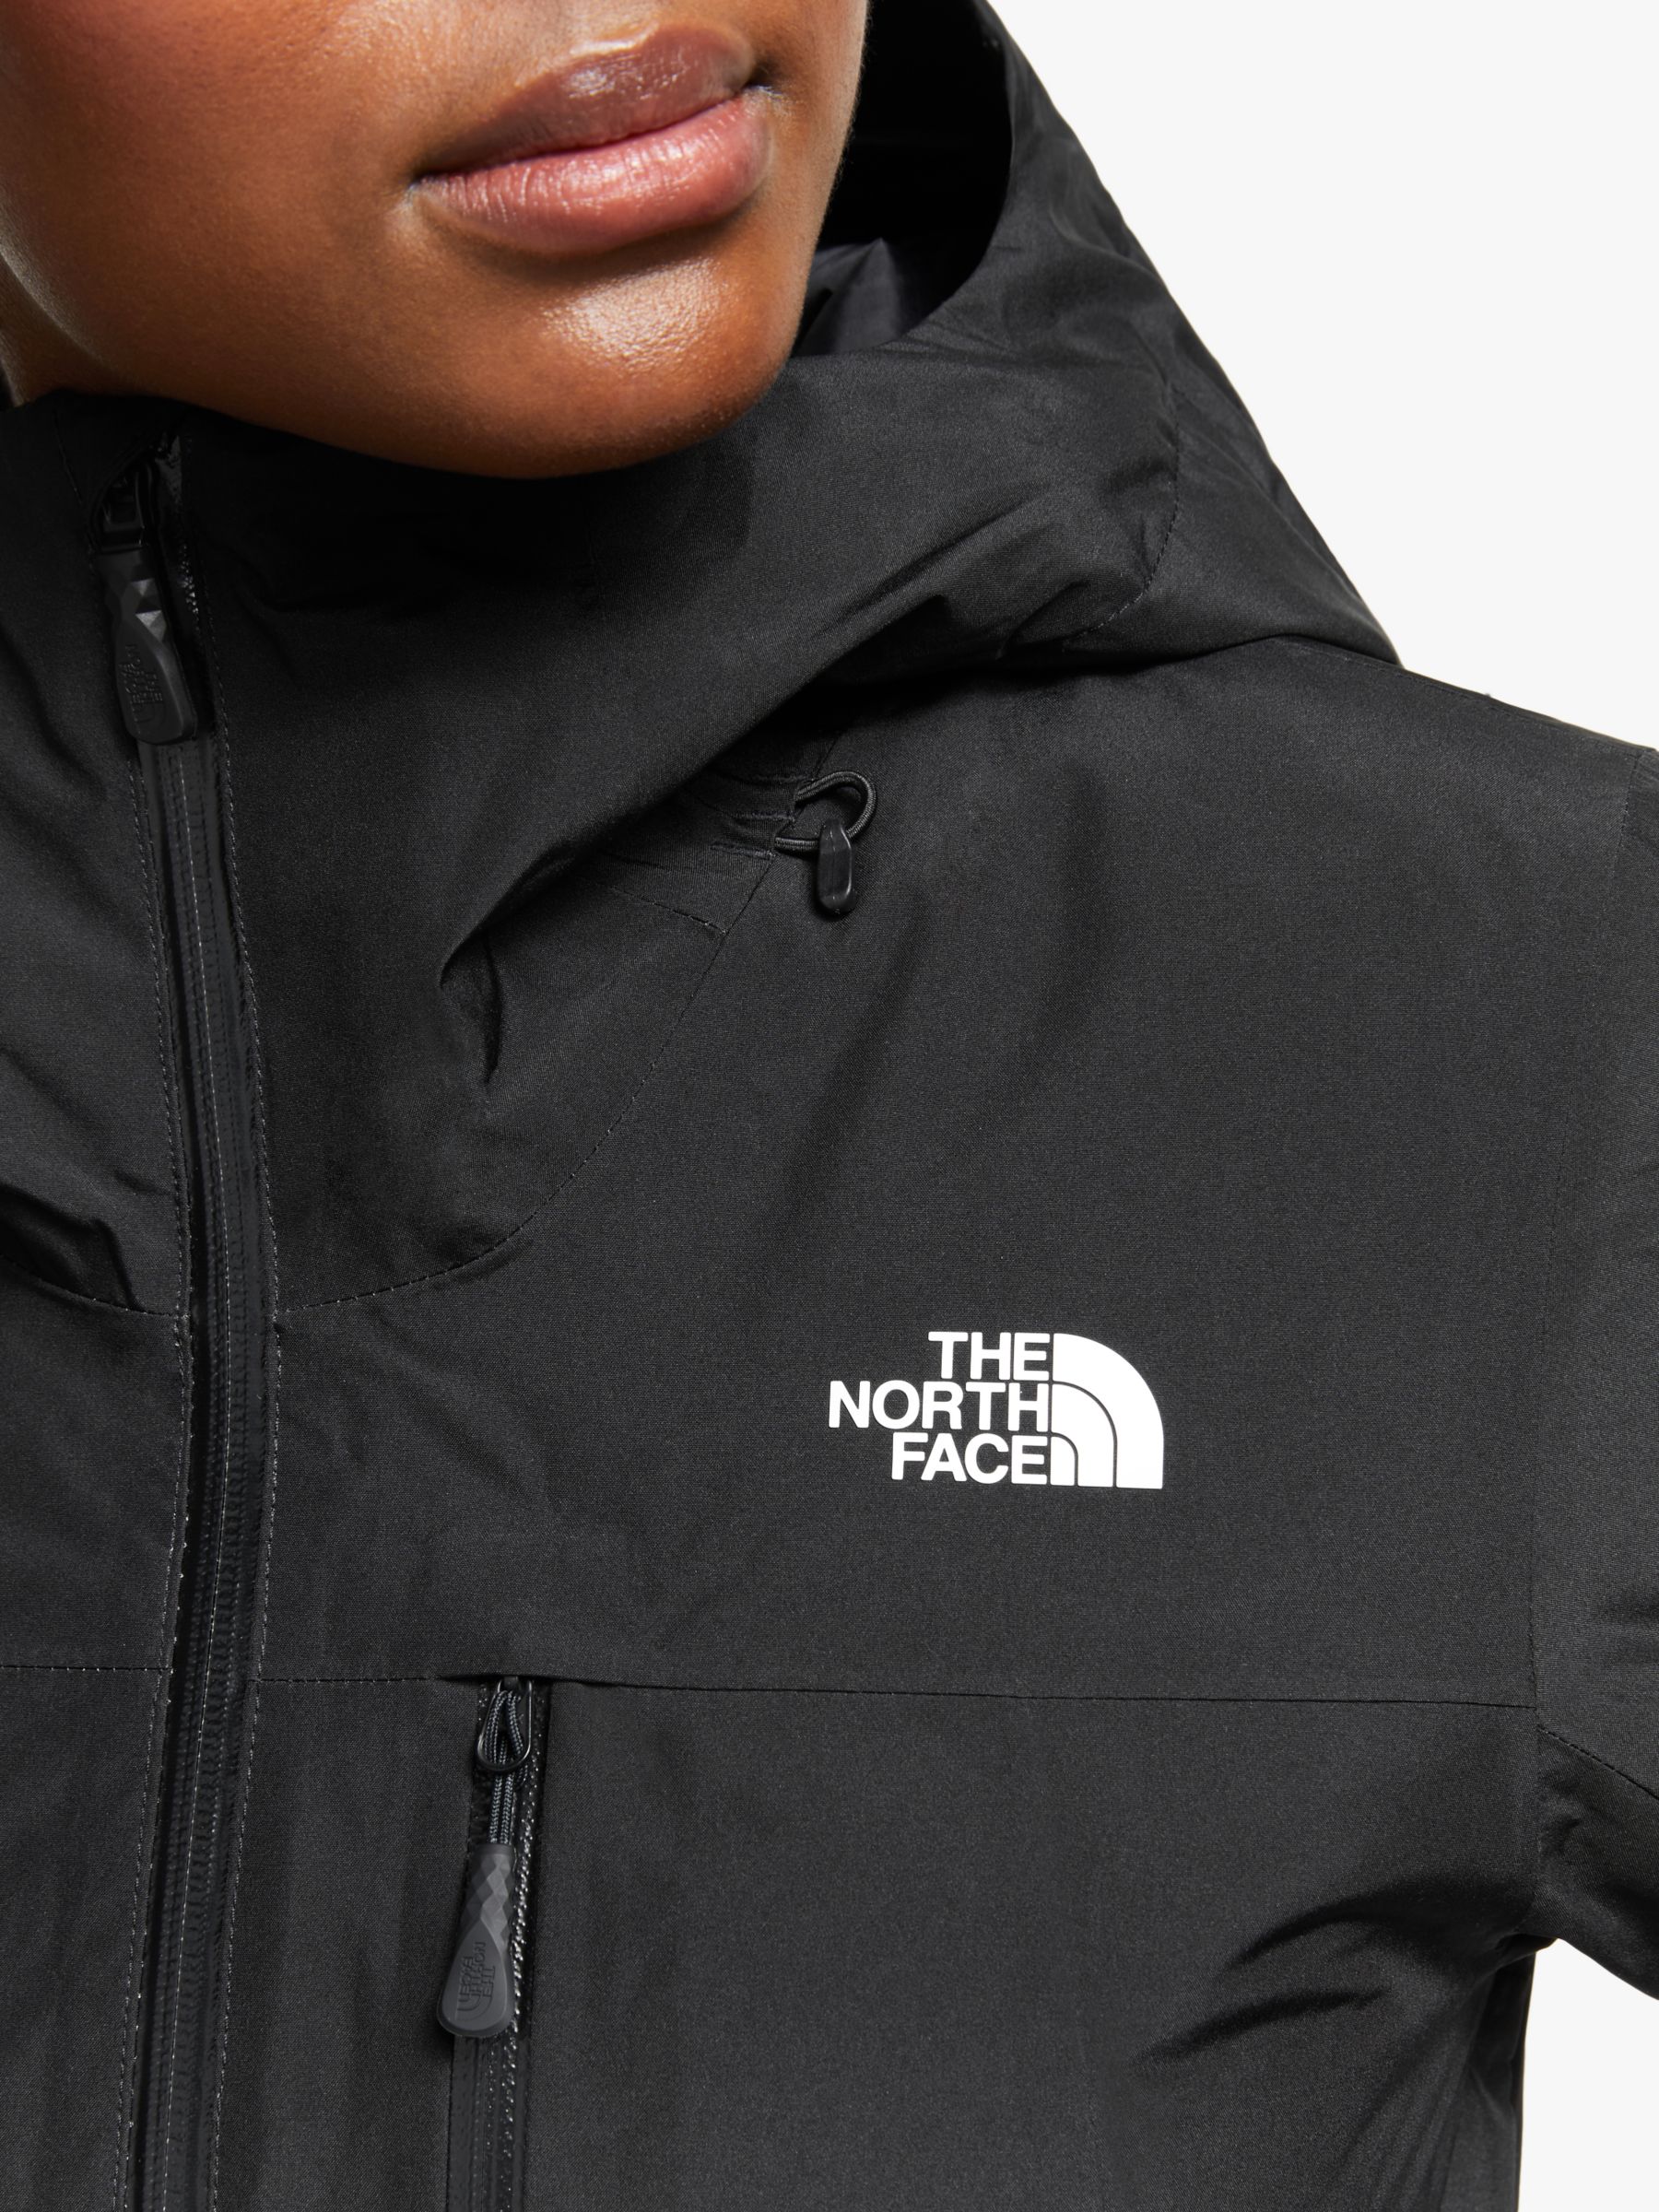 north face waterproof jacket womens sale